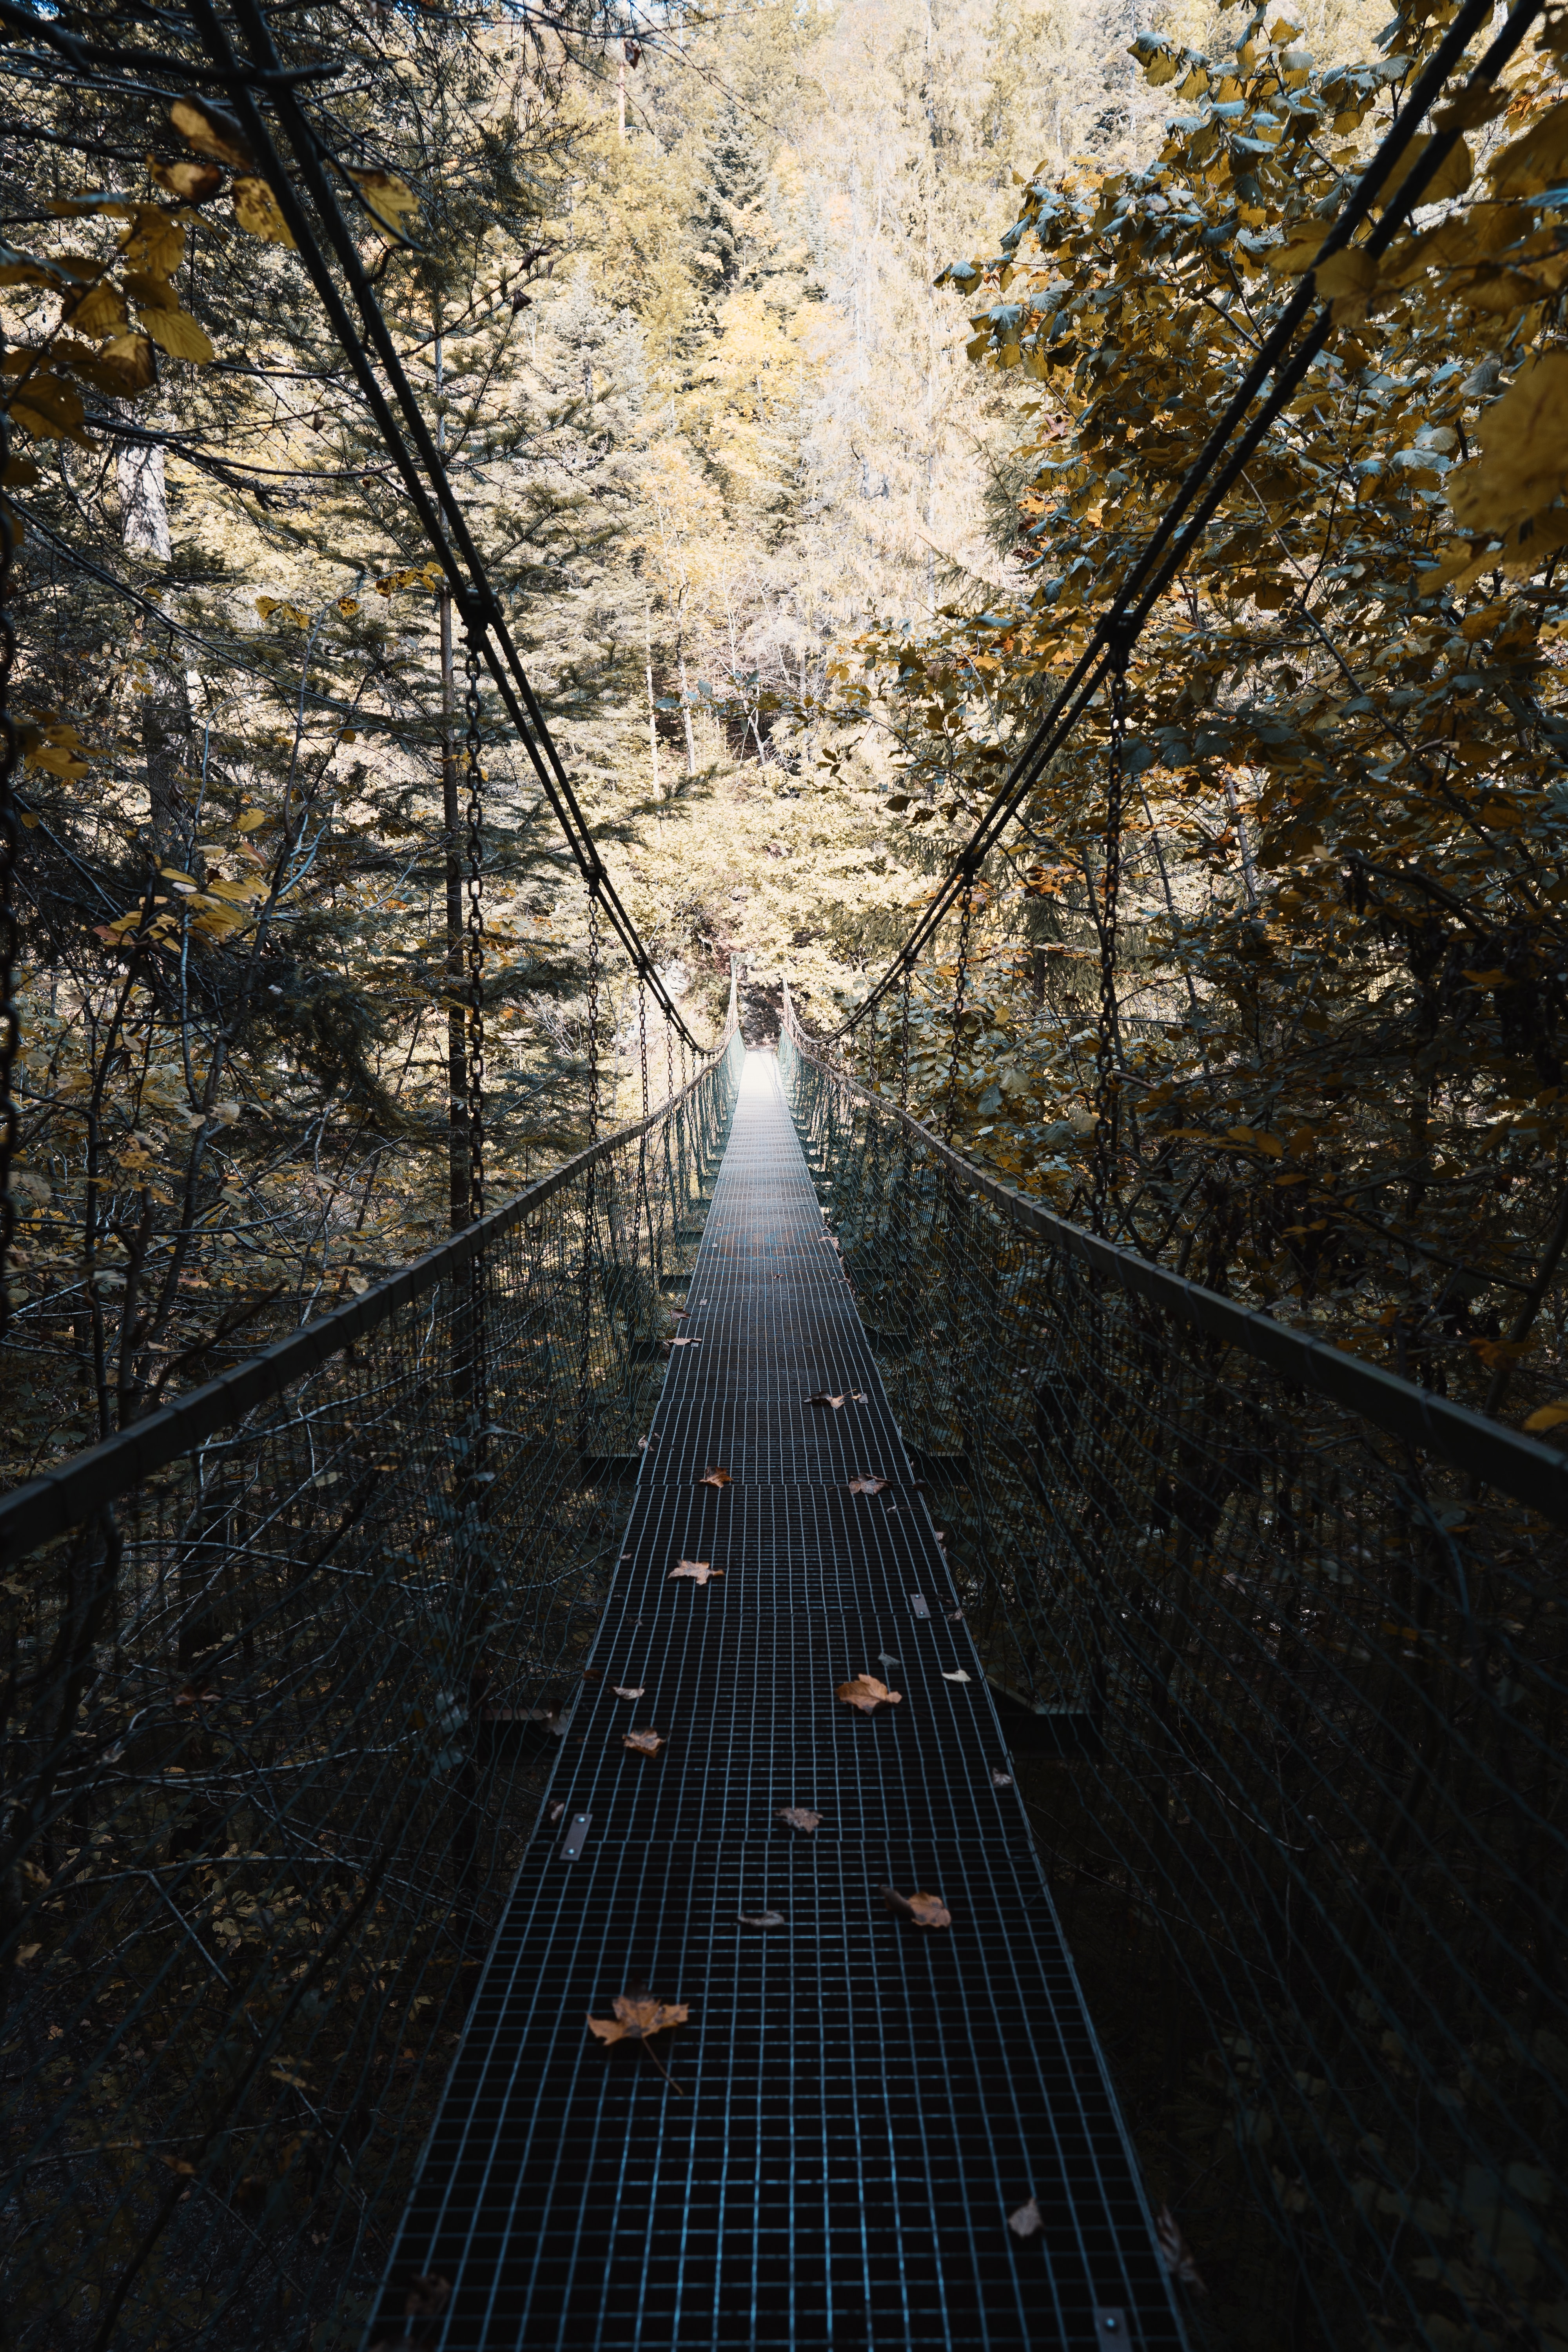 fallen leaves, trees, miscellanea, miscellaneous, forest, bridge, fallen foliage, suspension bridge High Definition image